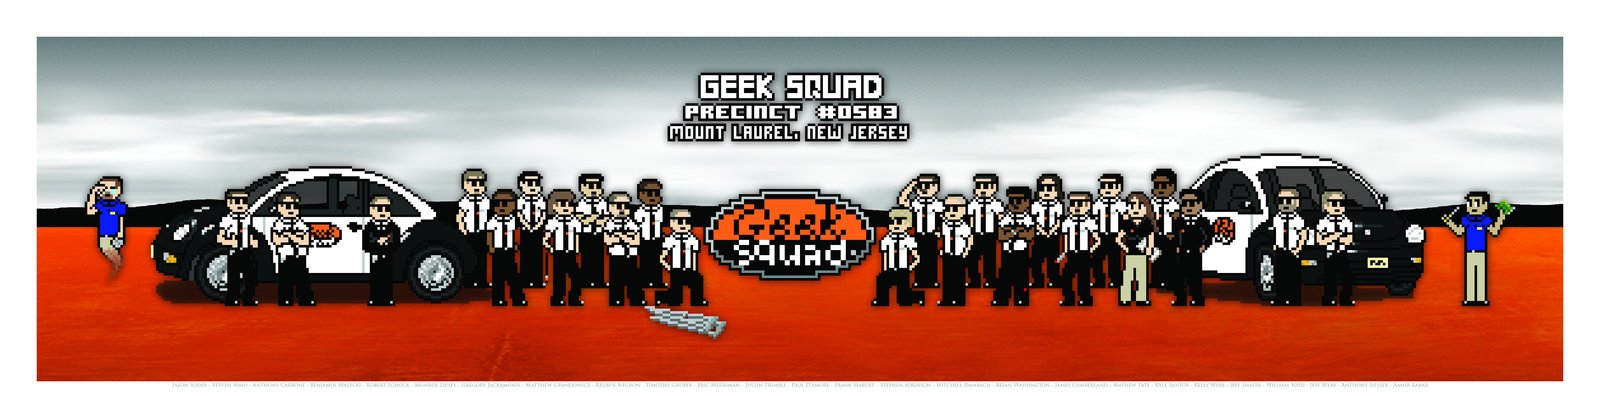 Geek Squad Banner By Mathewtate